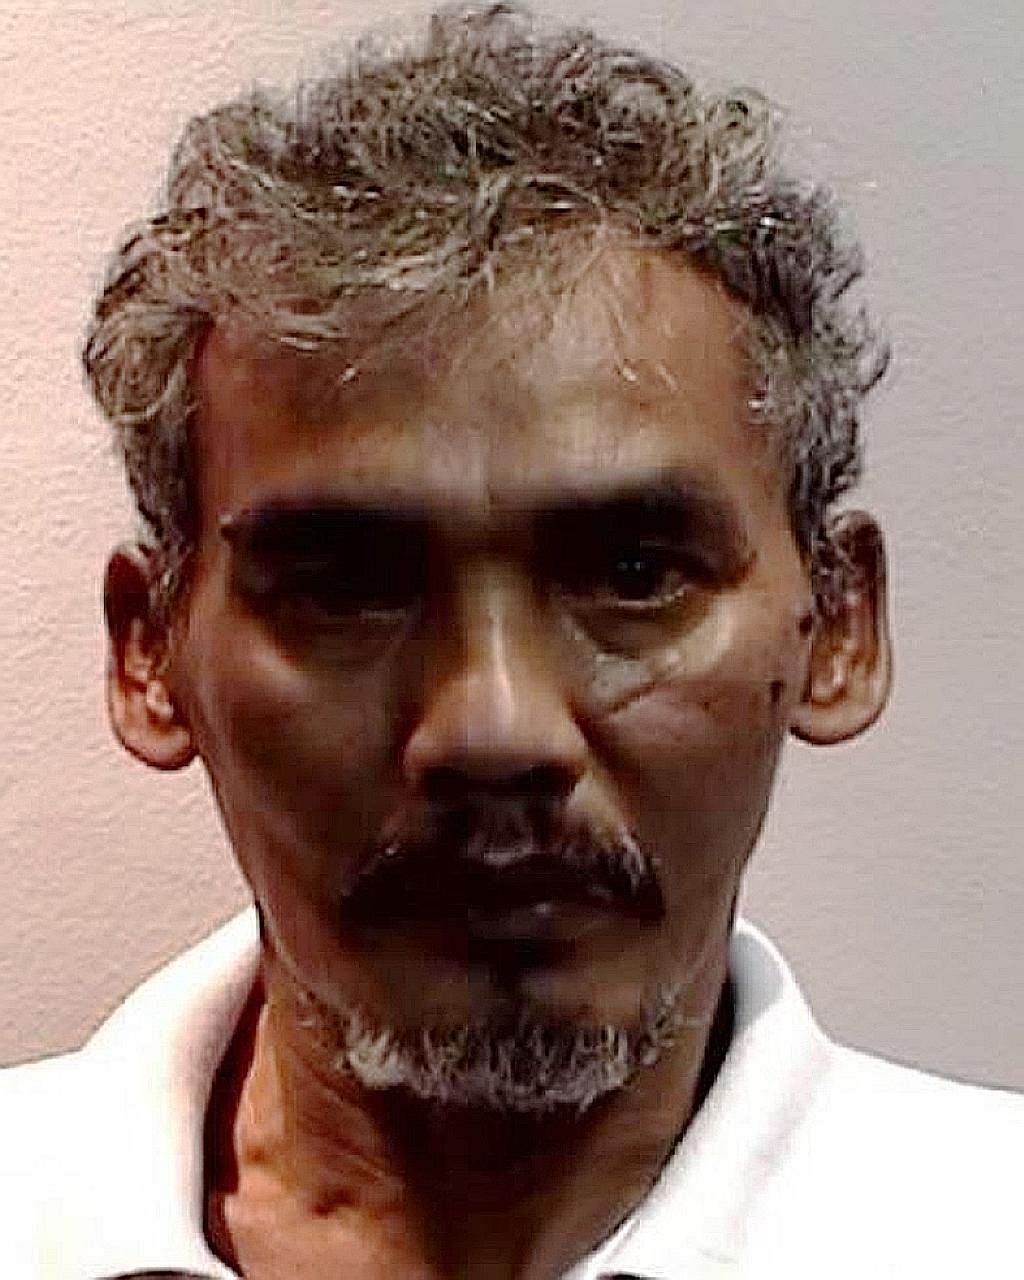 Zainudin Osman, 56, was jailed for over 21 months for several offences, including using criminal force on public servants.